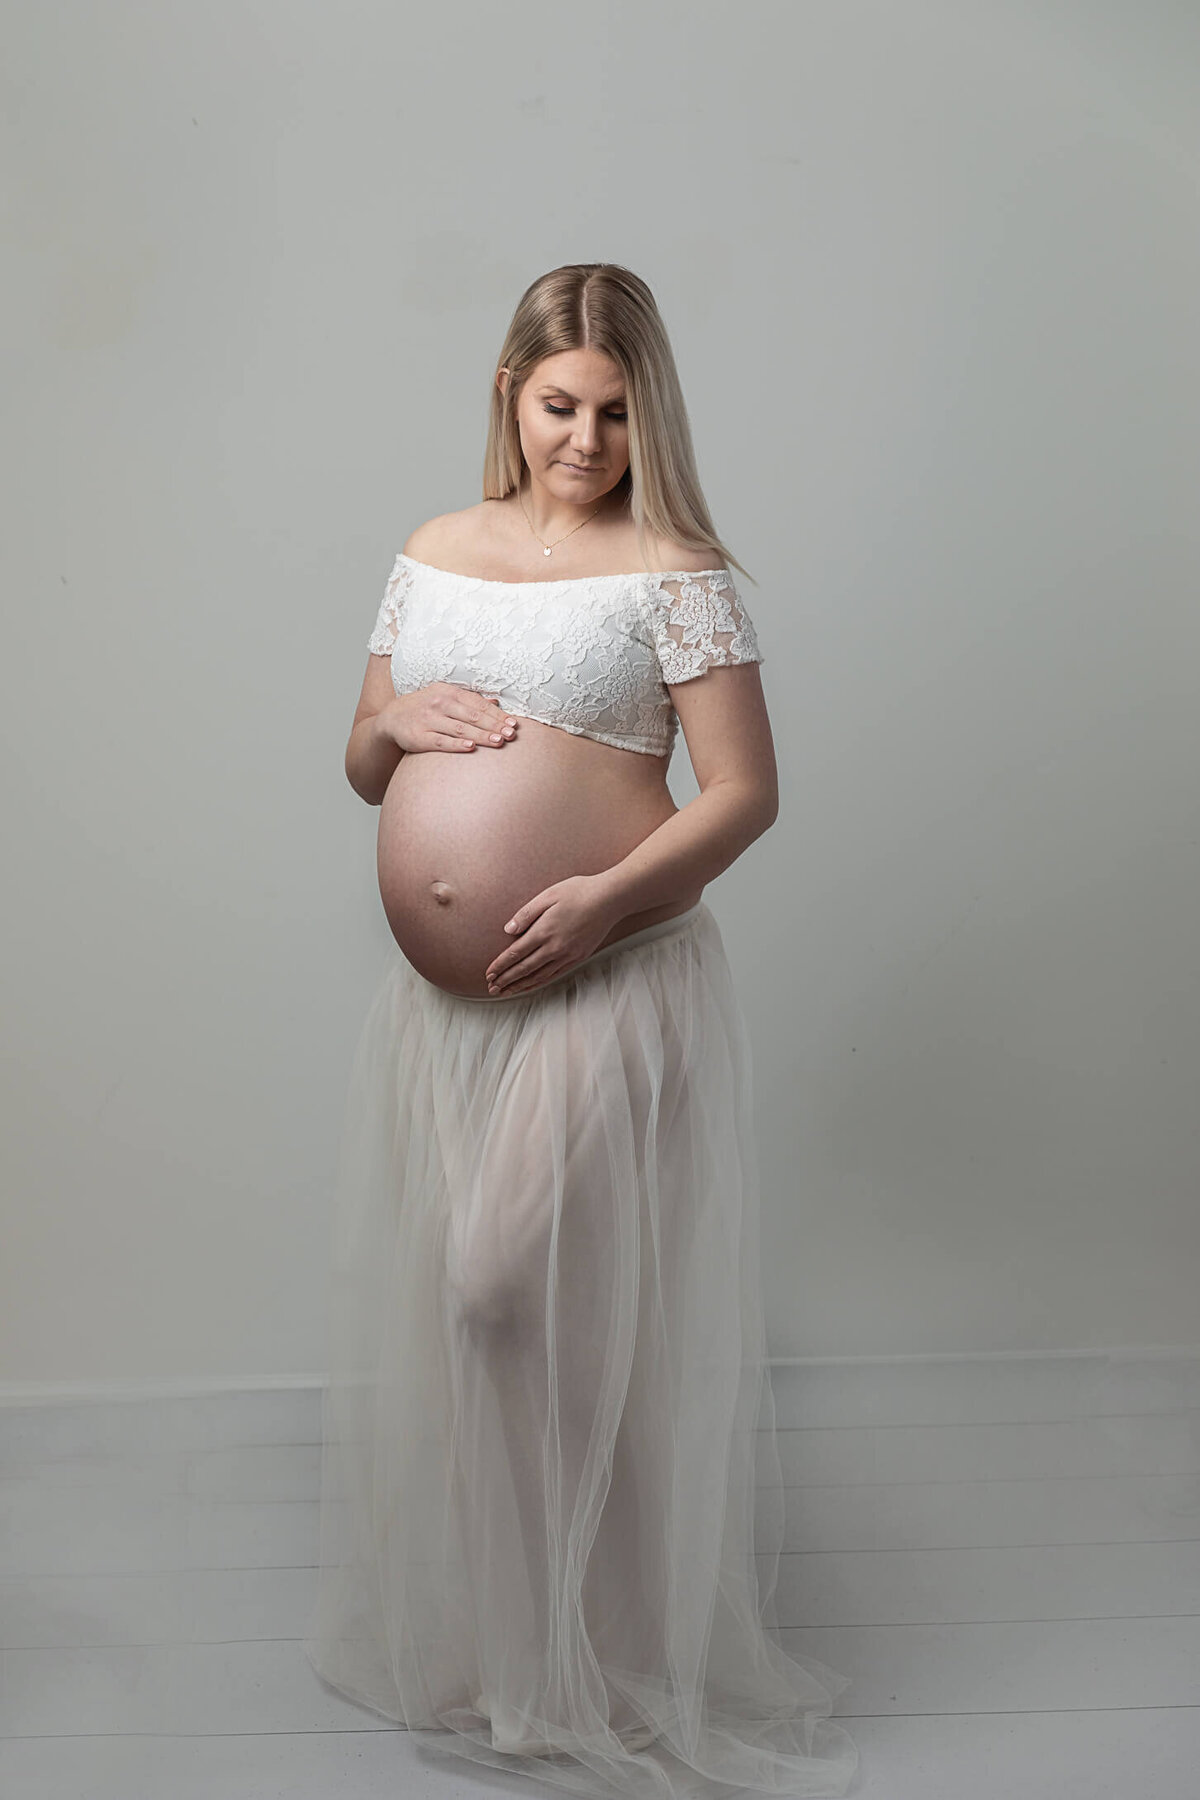 atlanta-maternity-photographer-5